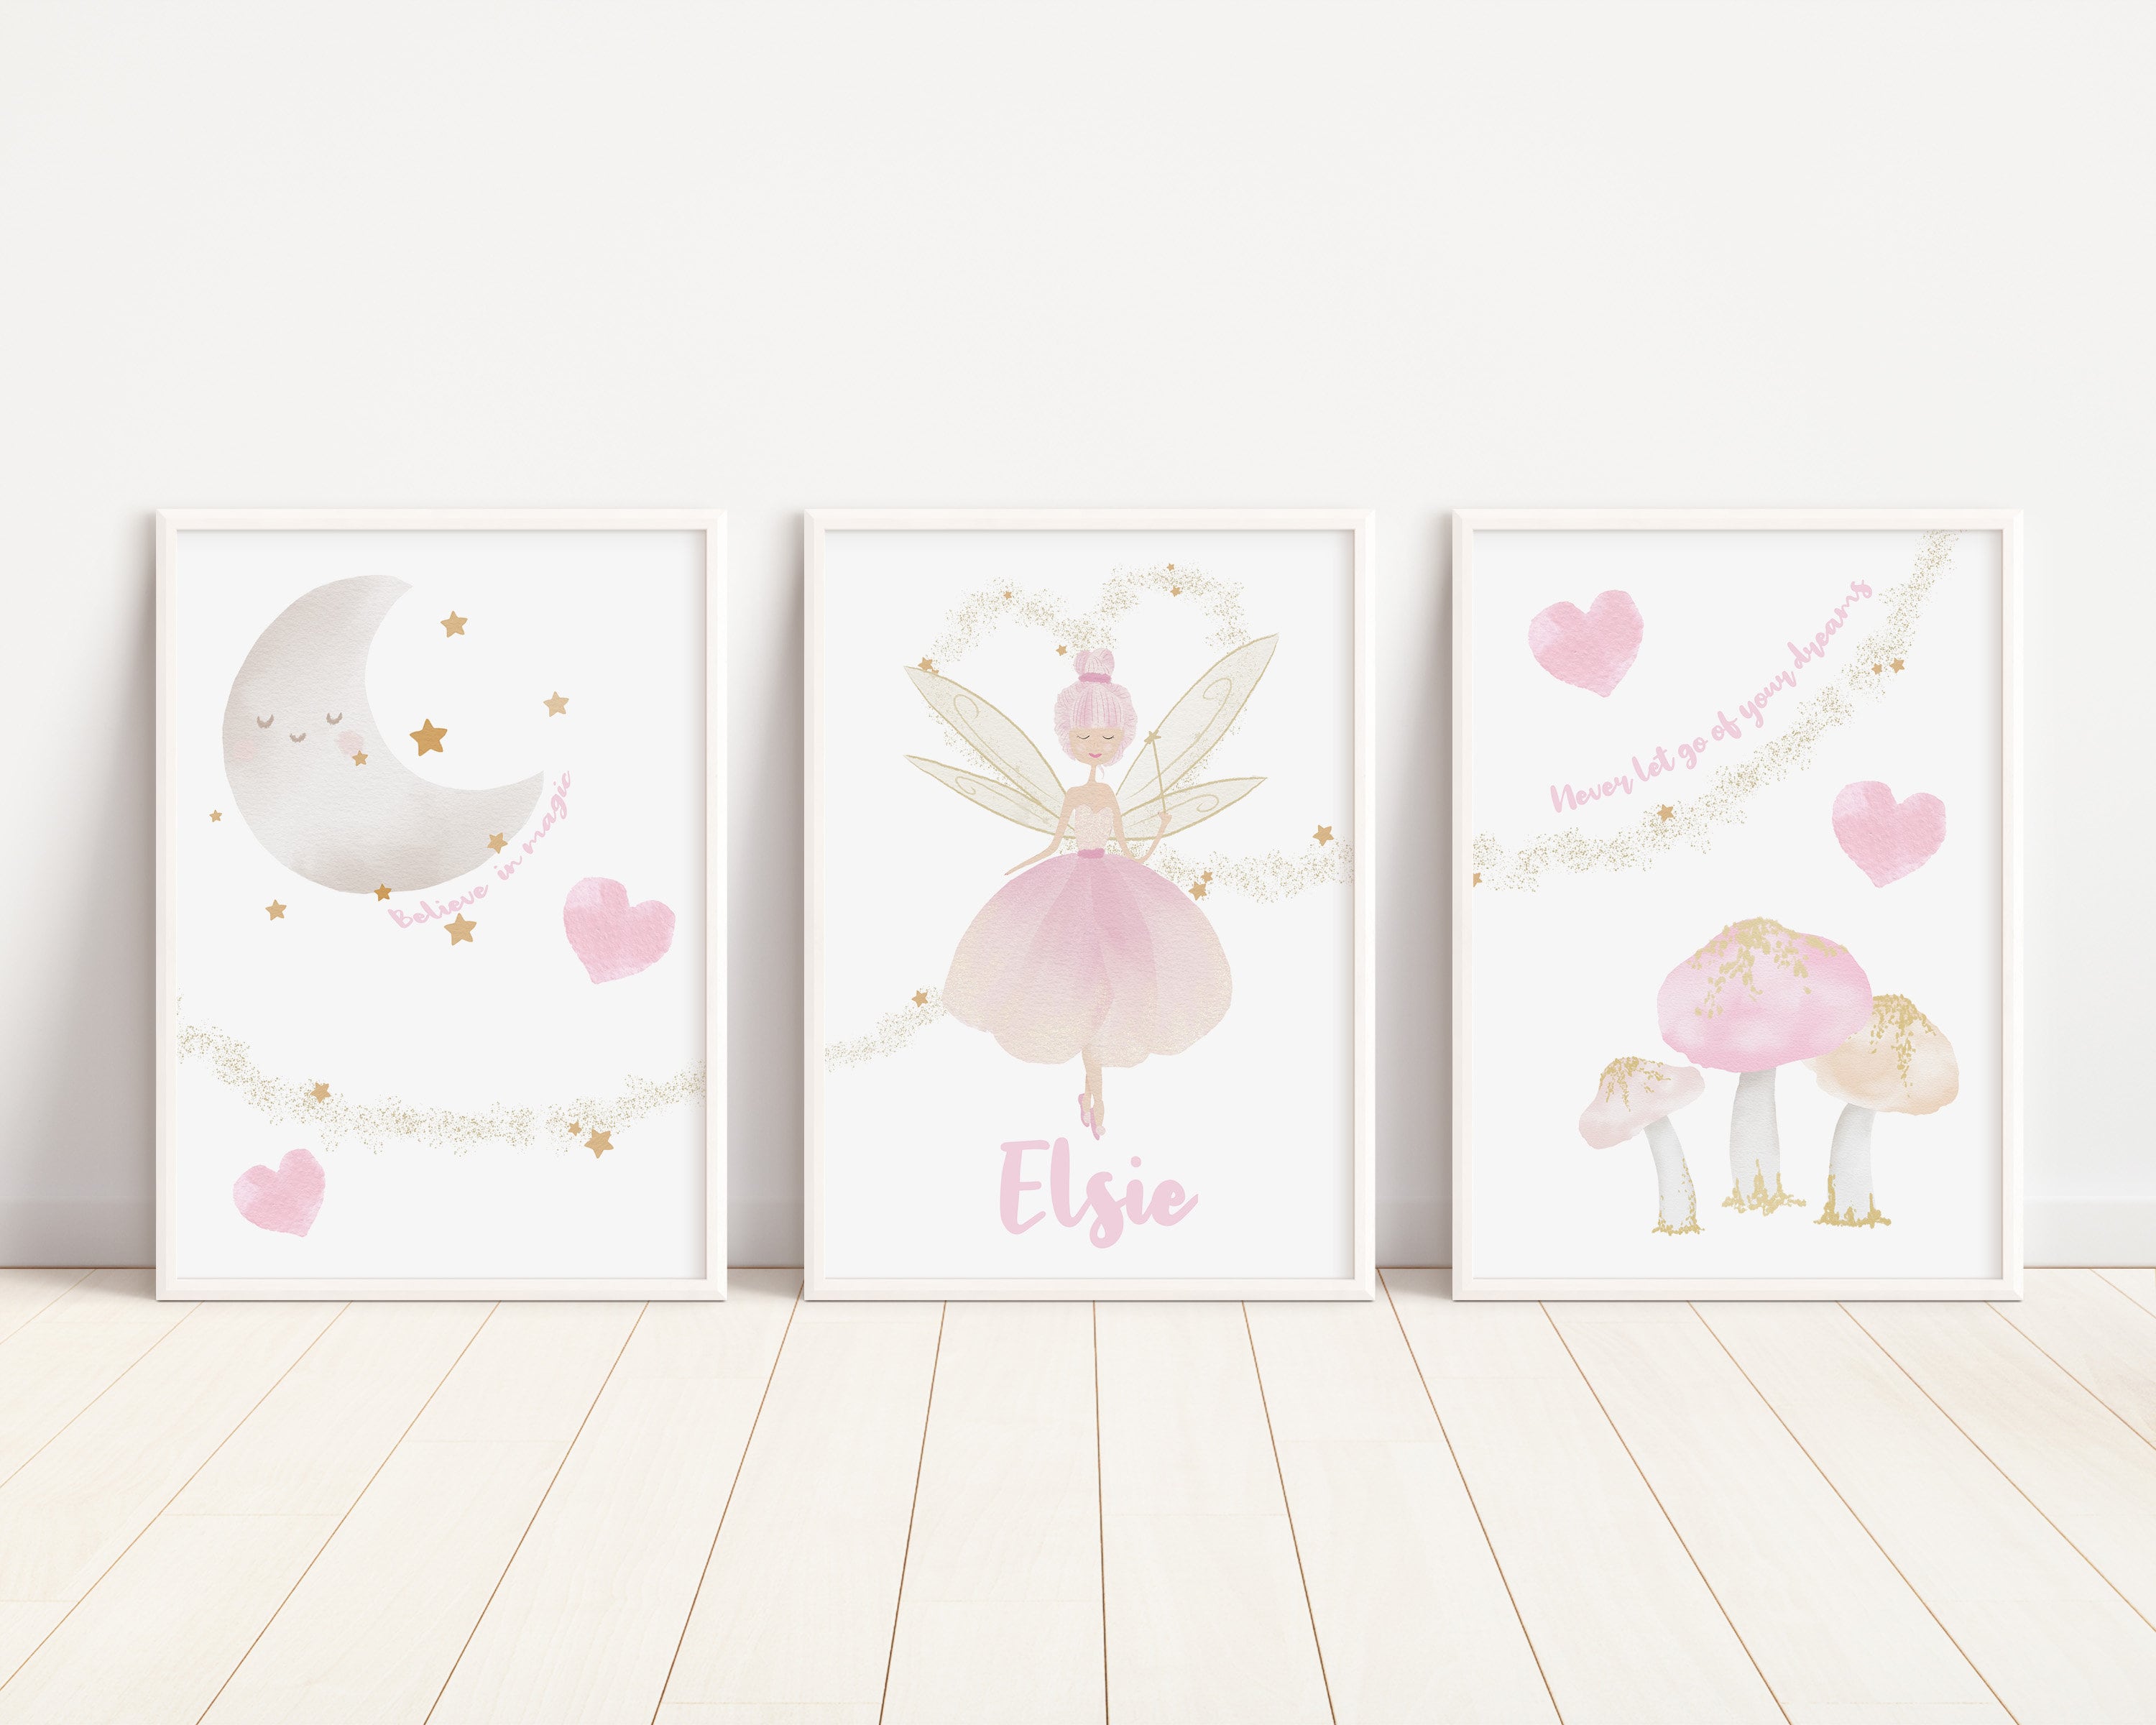 Set of 3 Mini Mushroom Toadstools Girls Bedroom Decor Fairy Decor Pink  Shelf Decor Girls Accessories Pink Bedroom 